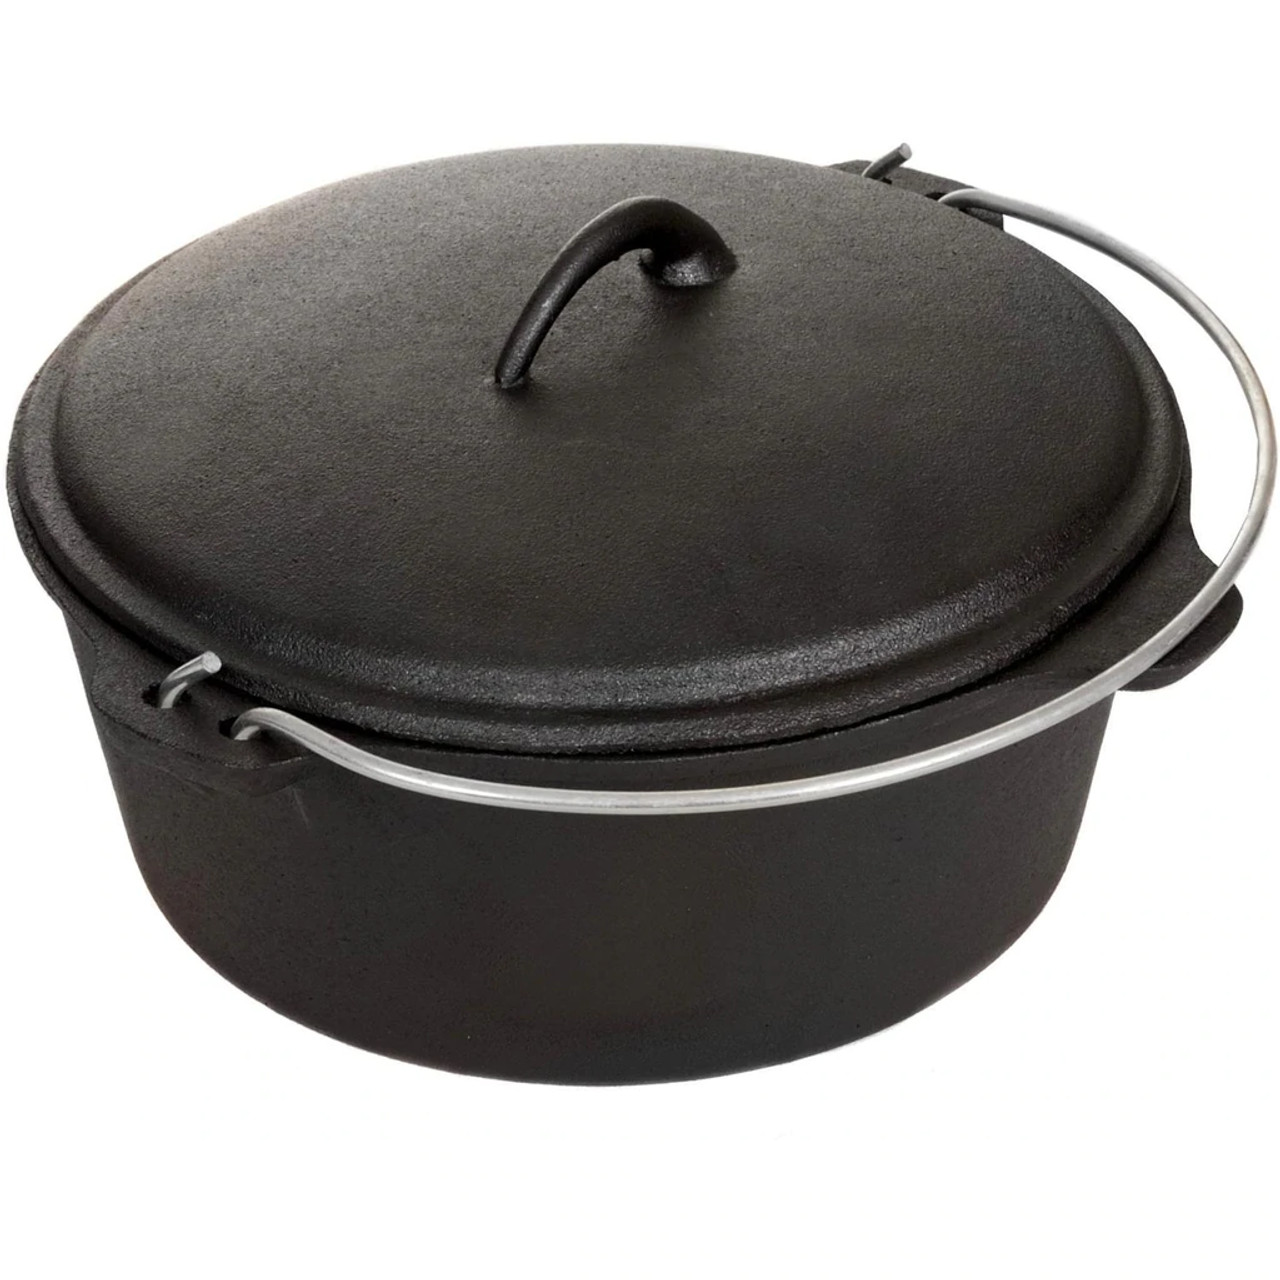 pre-seasoned cast iron sauce pan basting